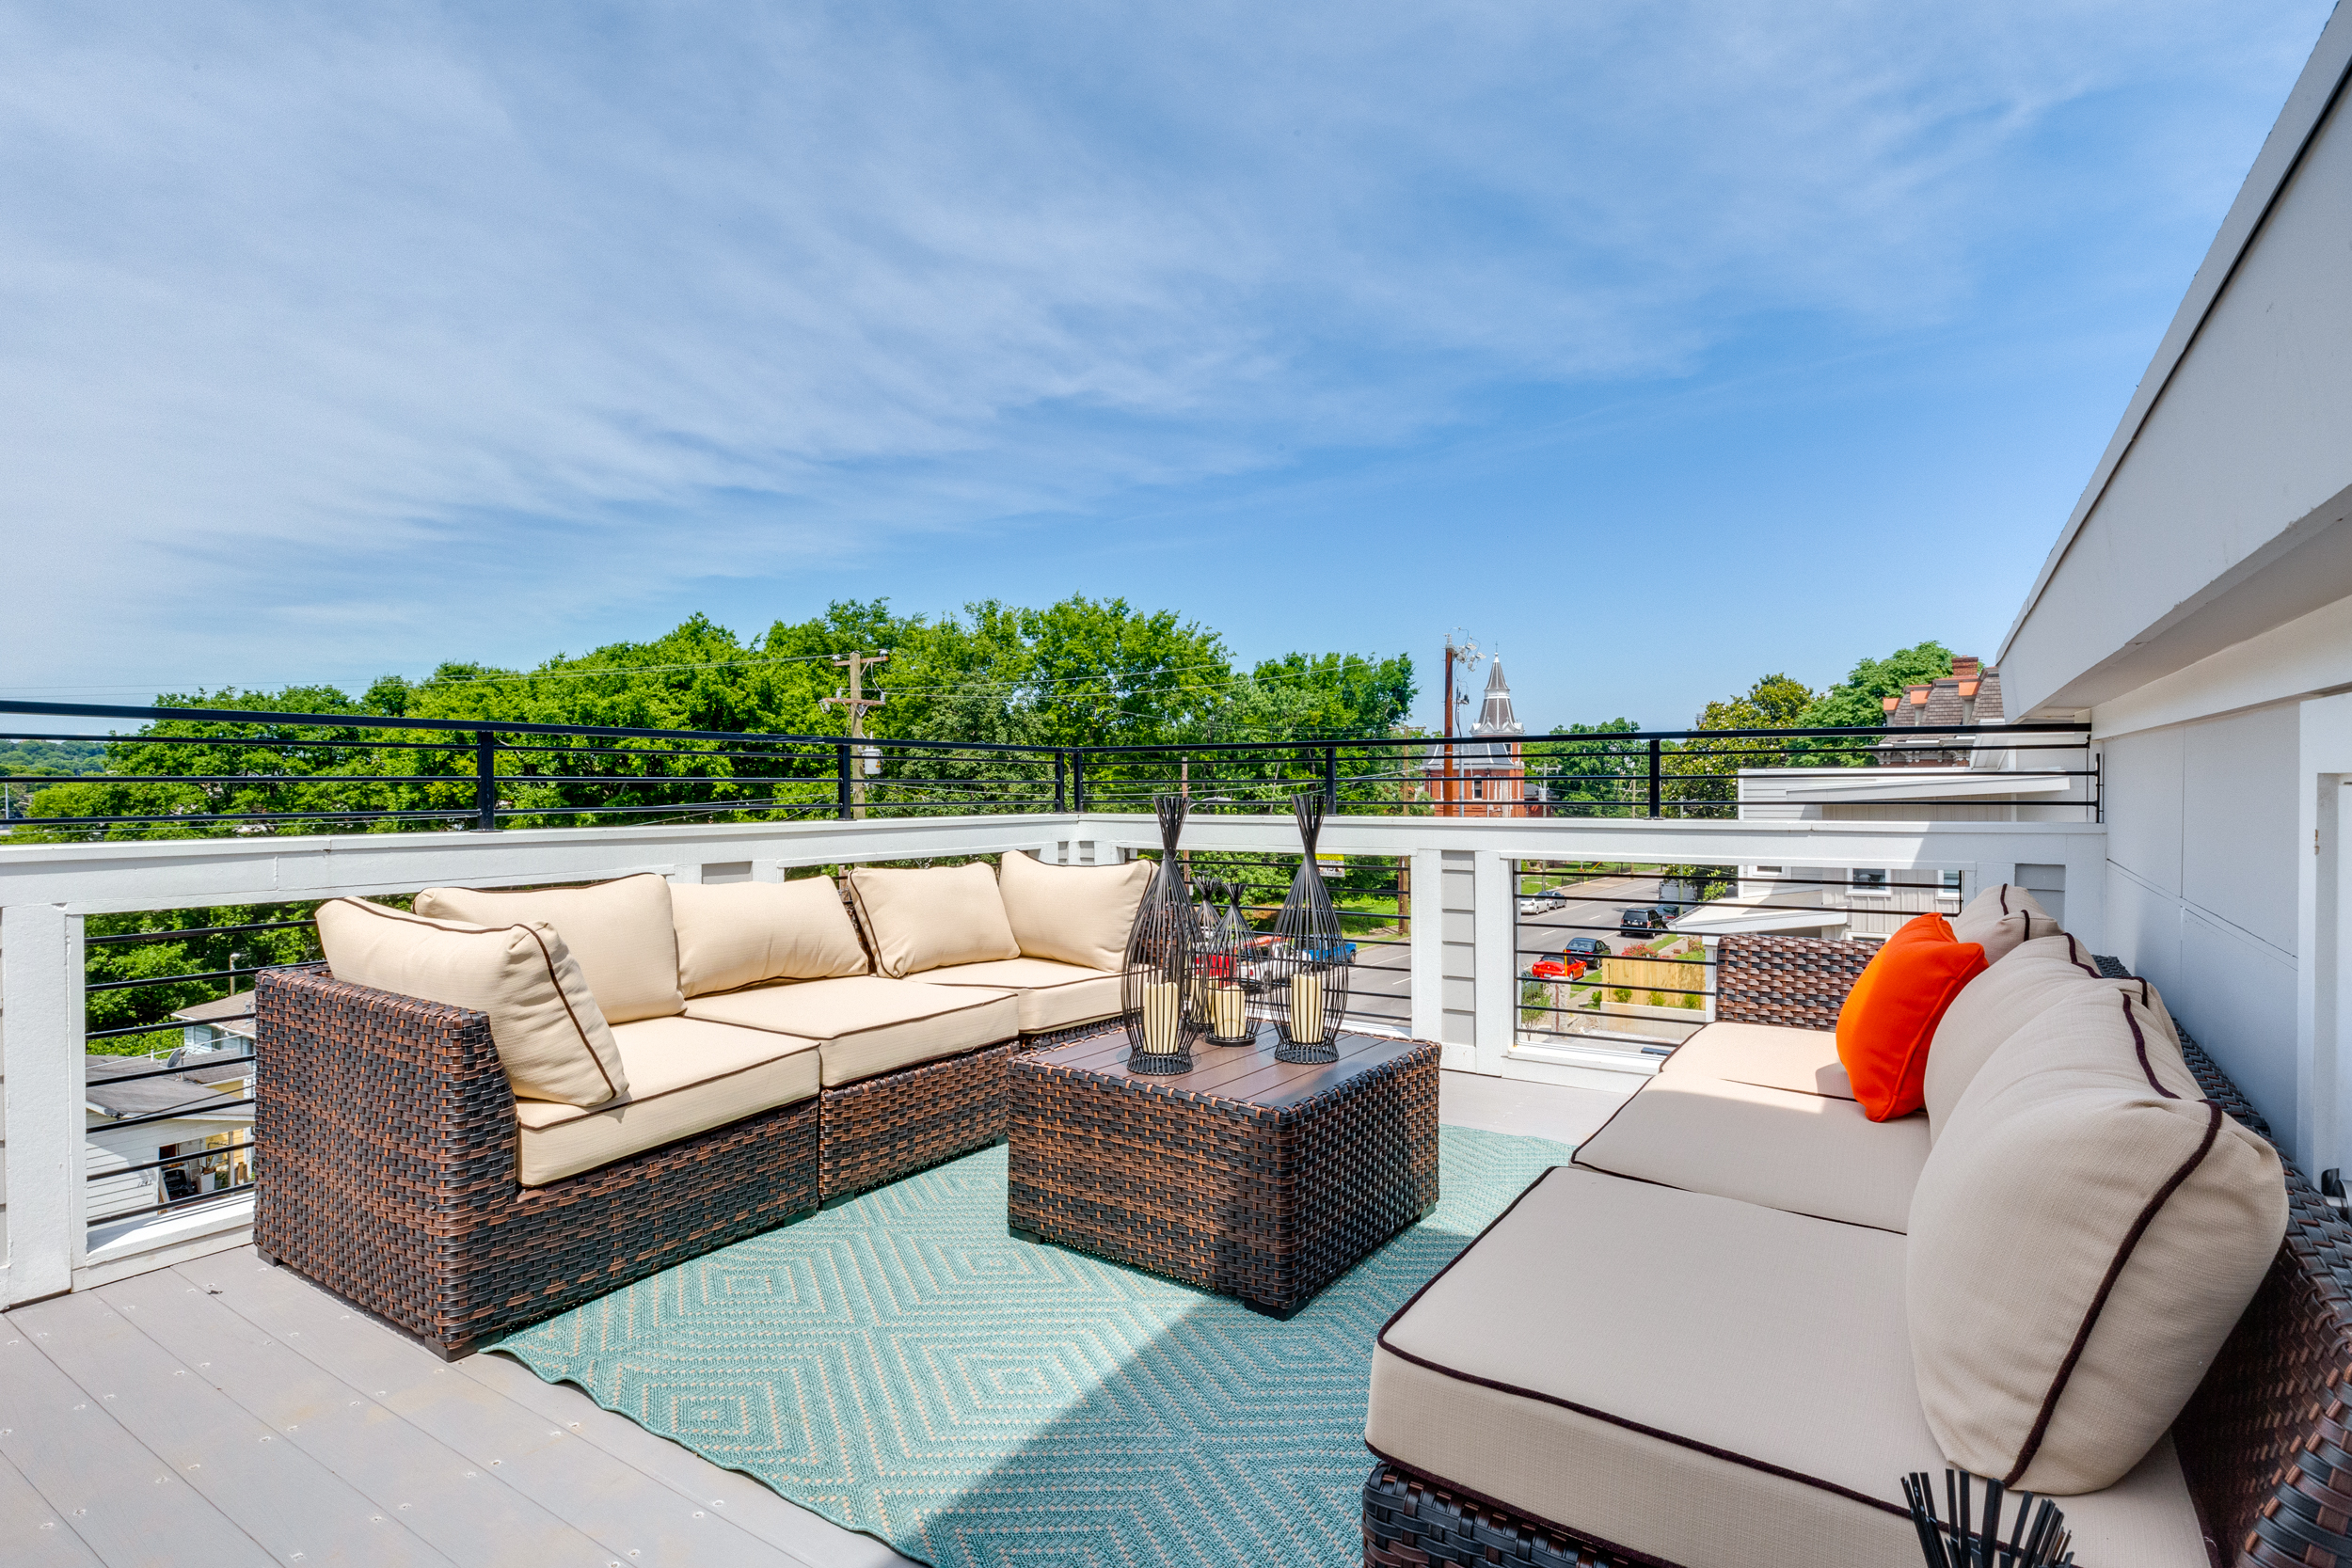 domophotos premium hdr real estate photography - Nashville, TN roof deck